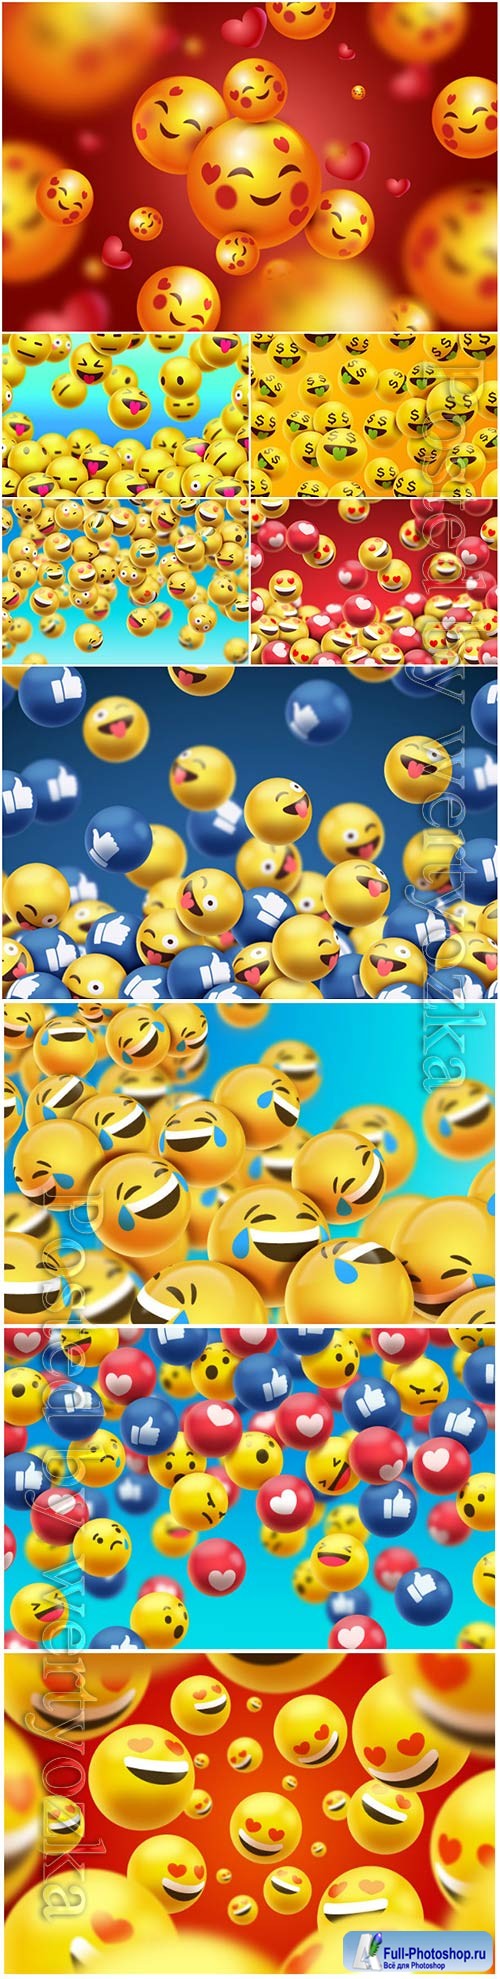 Emojis background realistic vector design